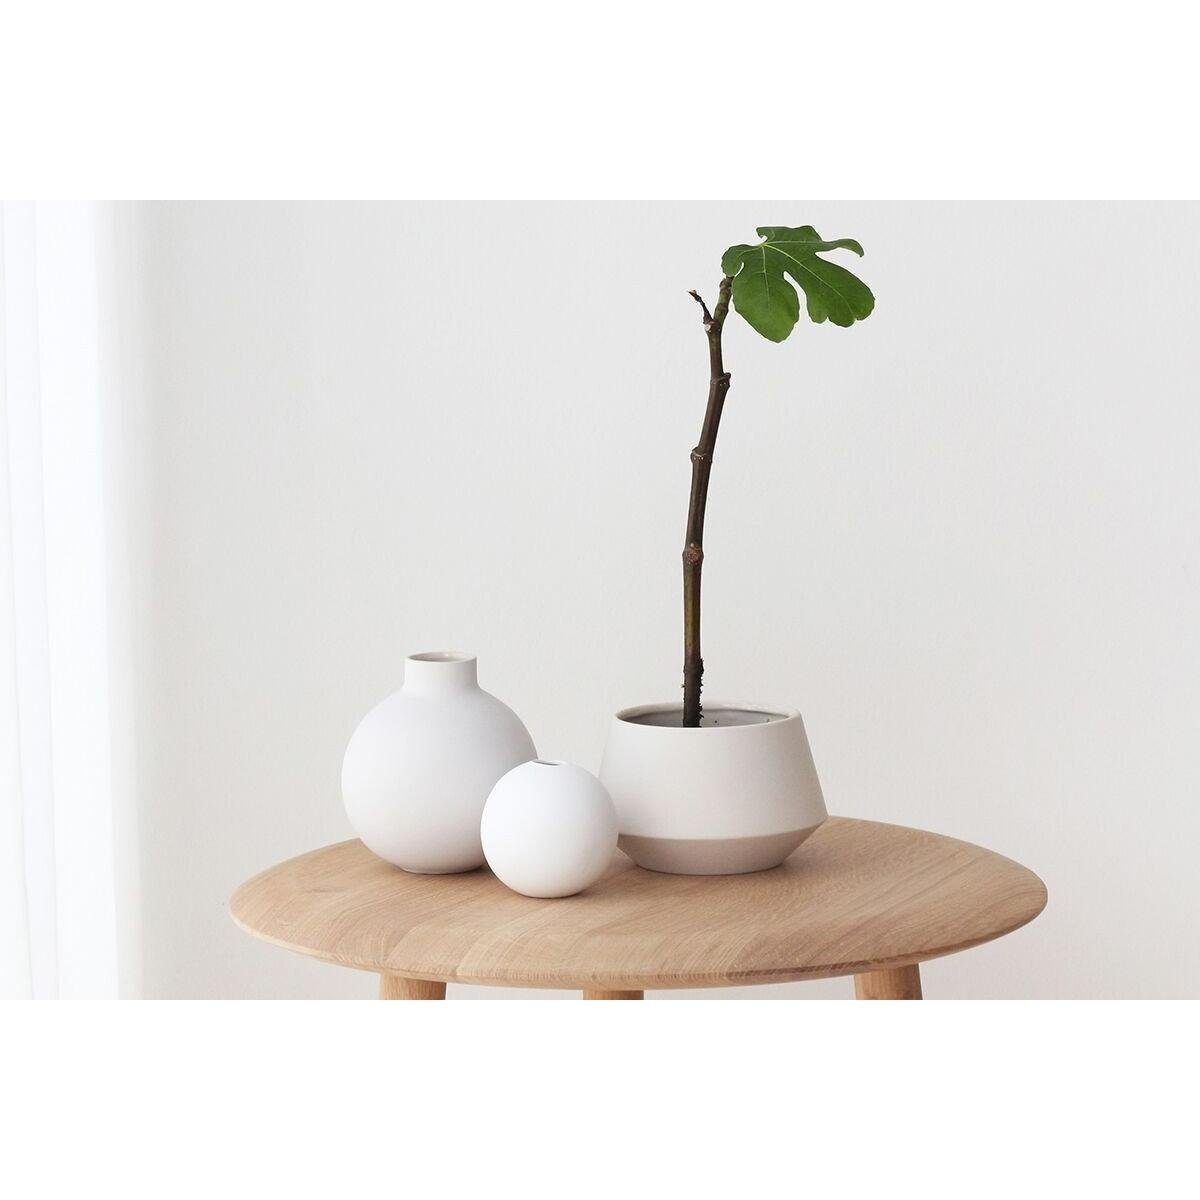 White Vase Cooee Design (8cm) Ball Dekovase